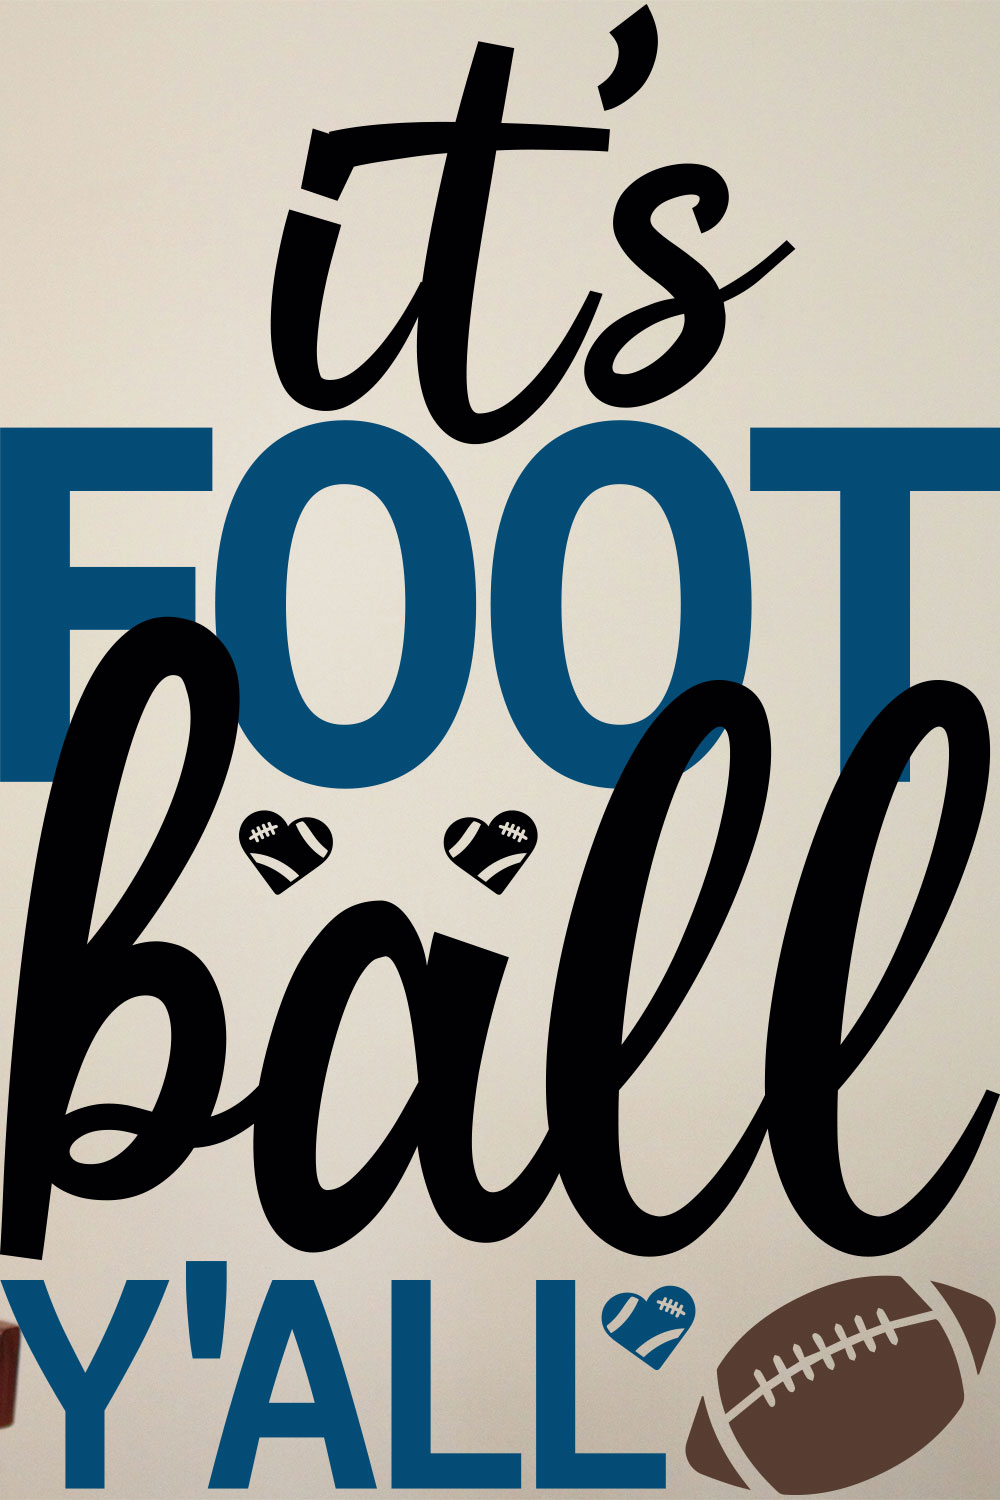 Football Mom SVG Bundle pinterest preview image.